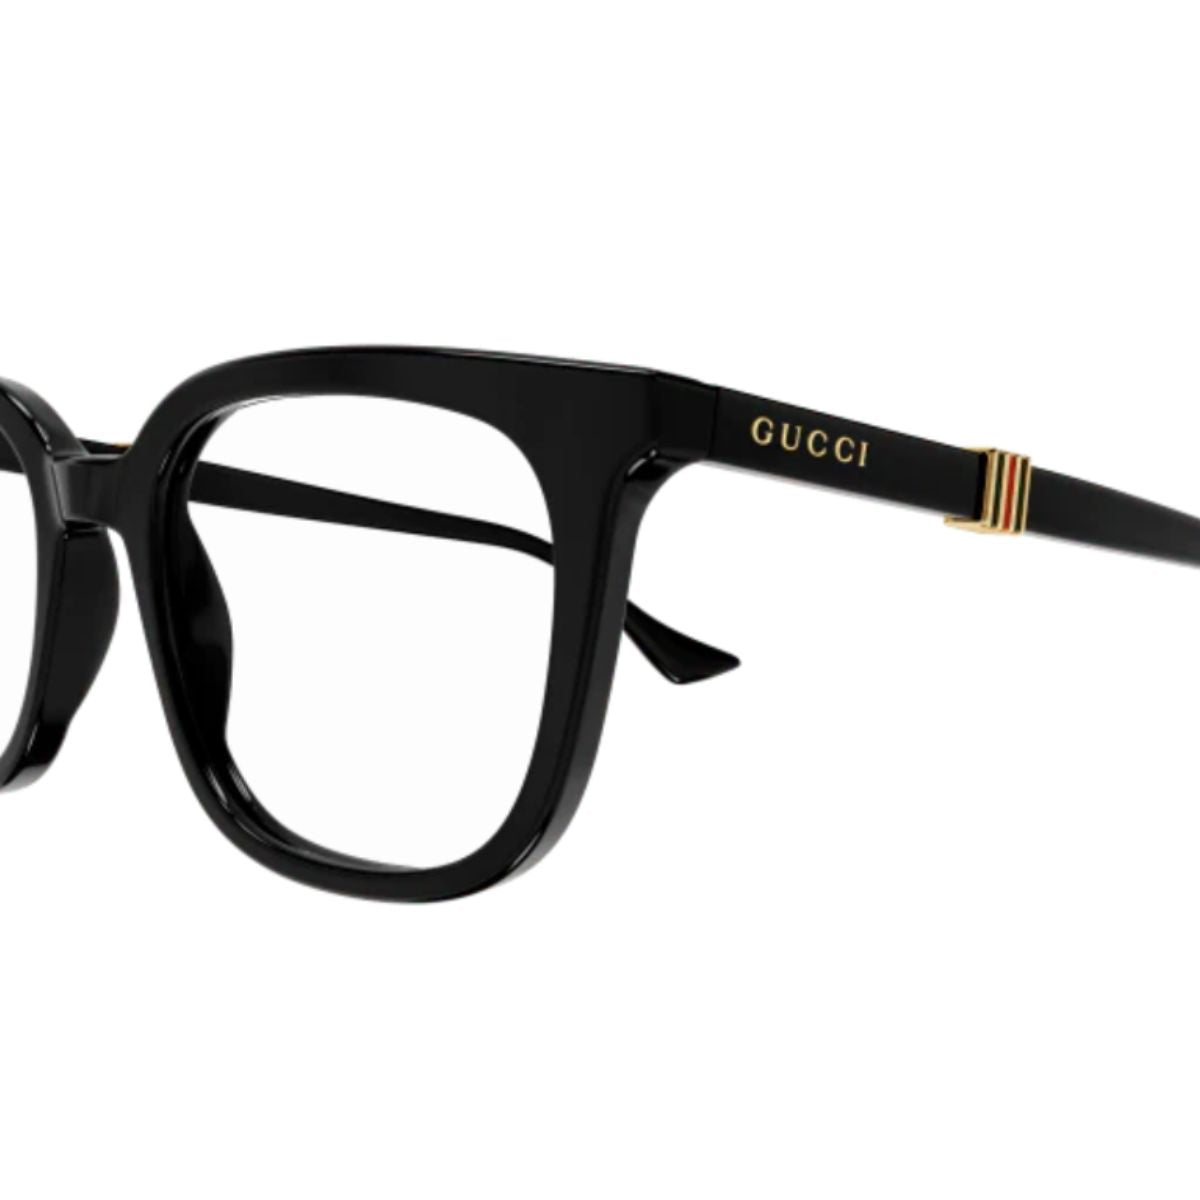 "Gucci 1479O 001 Frames - Browse Optorium's Fashionable Eyewear Range"